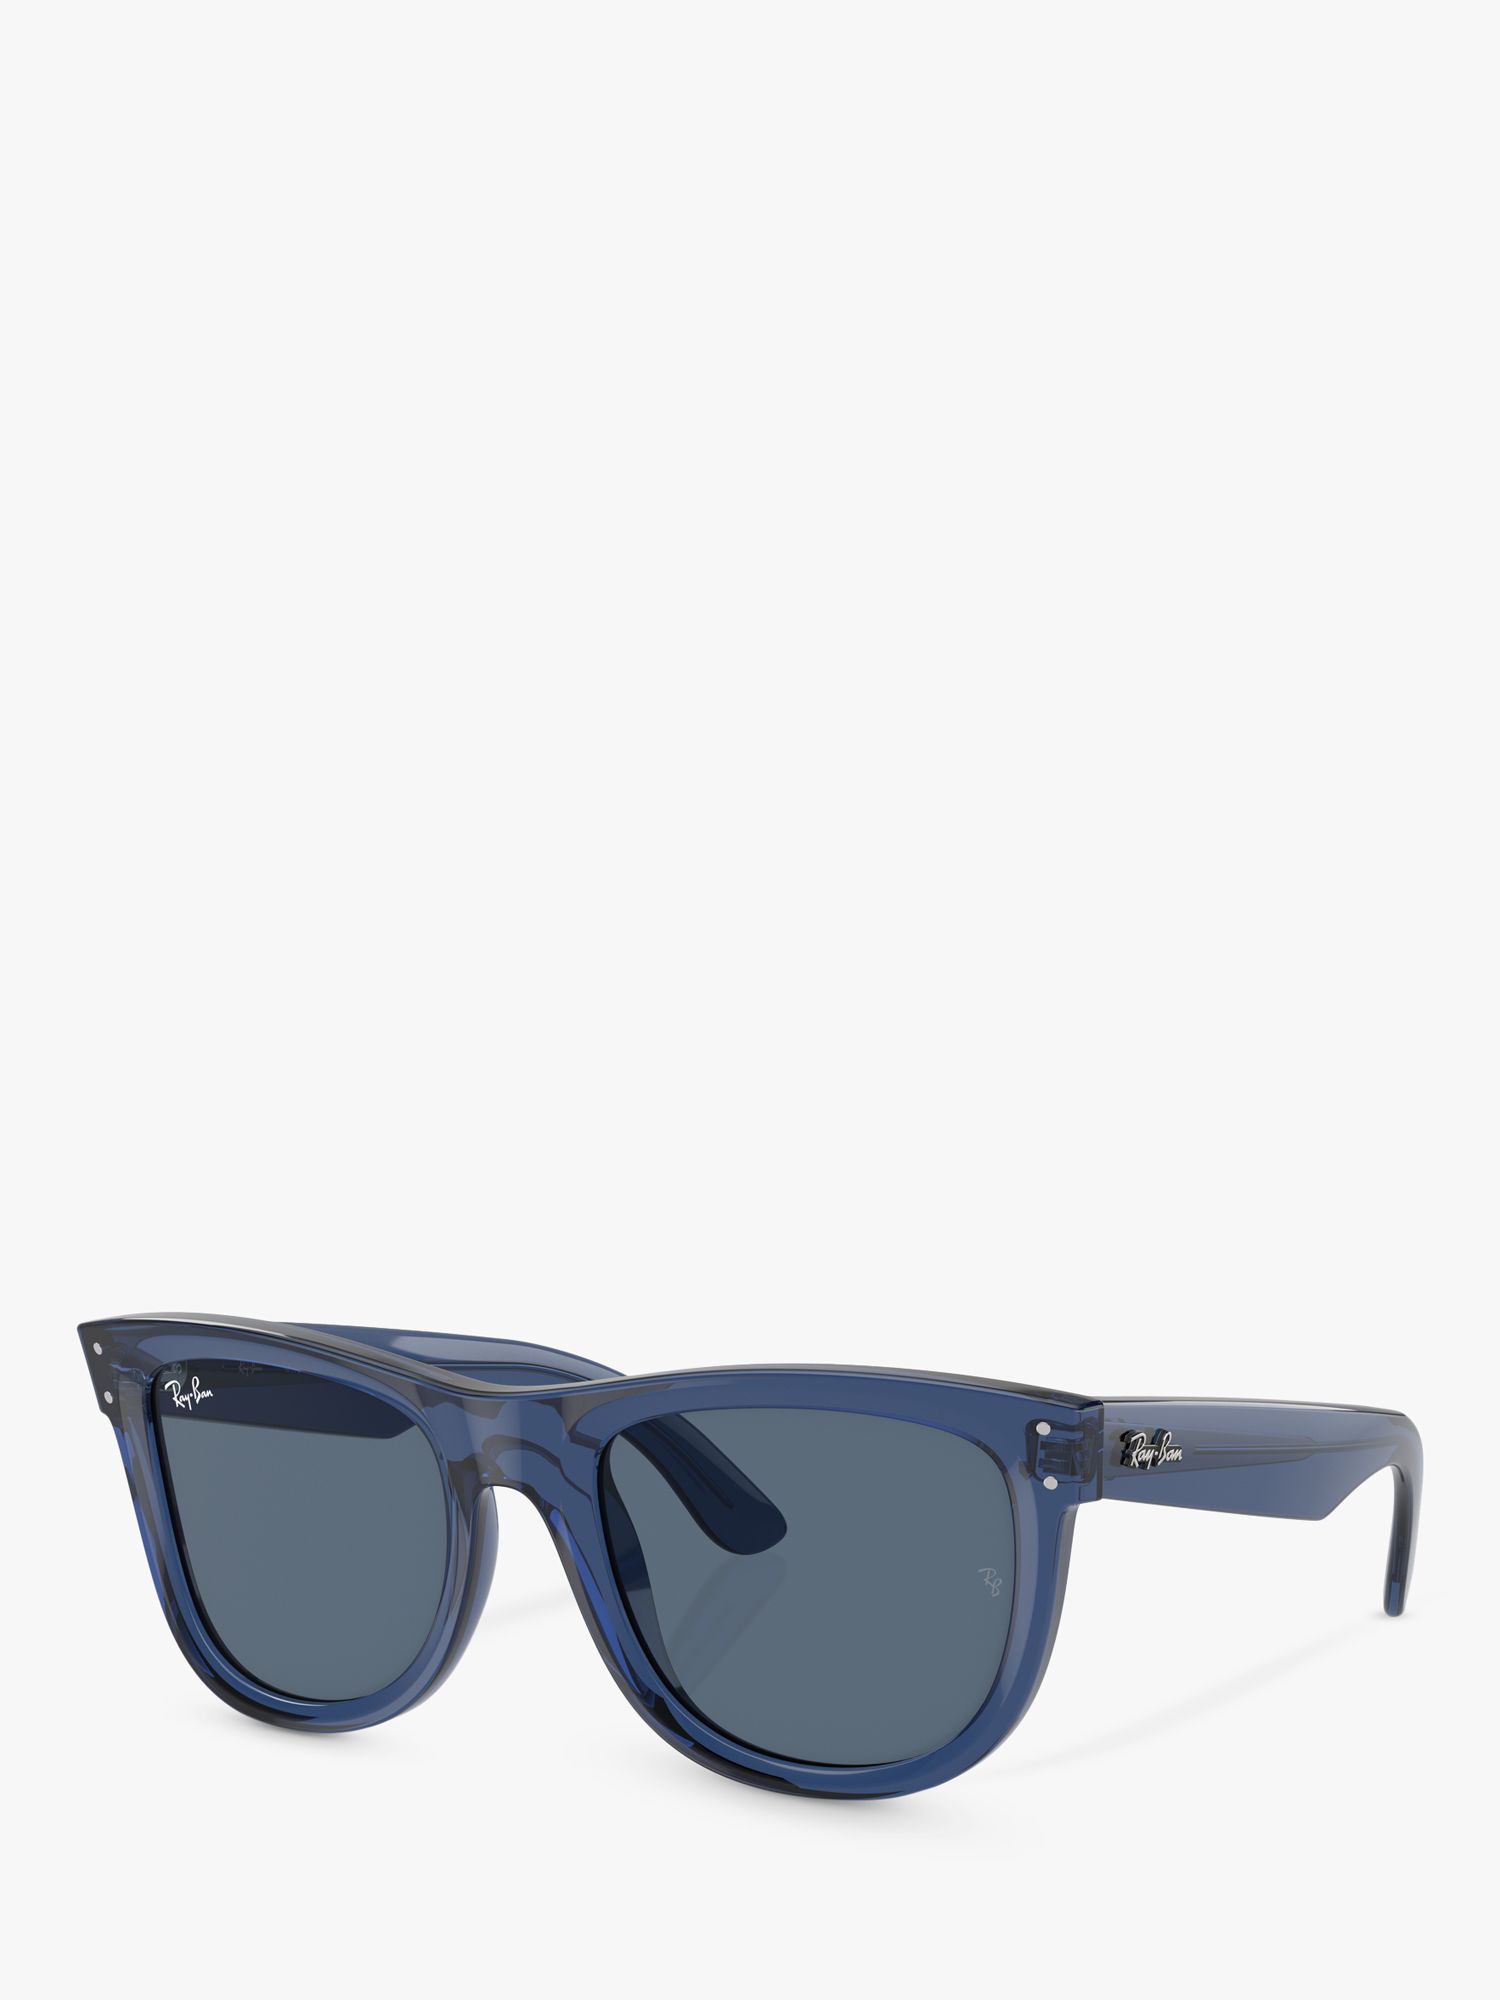 Ray-Ban RBR0502S Unisex Wayfarer Reverse Sunglasses, Transparent Navy Blue/Blue